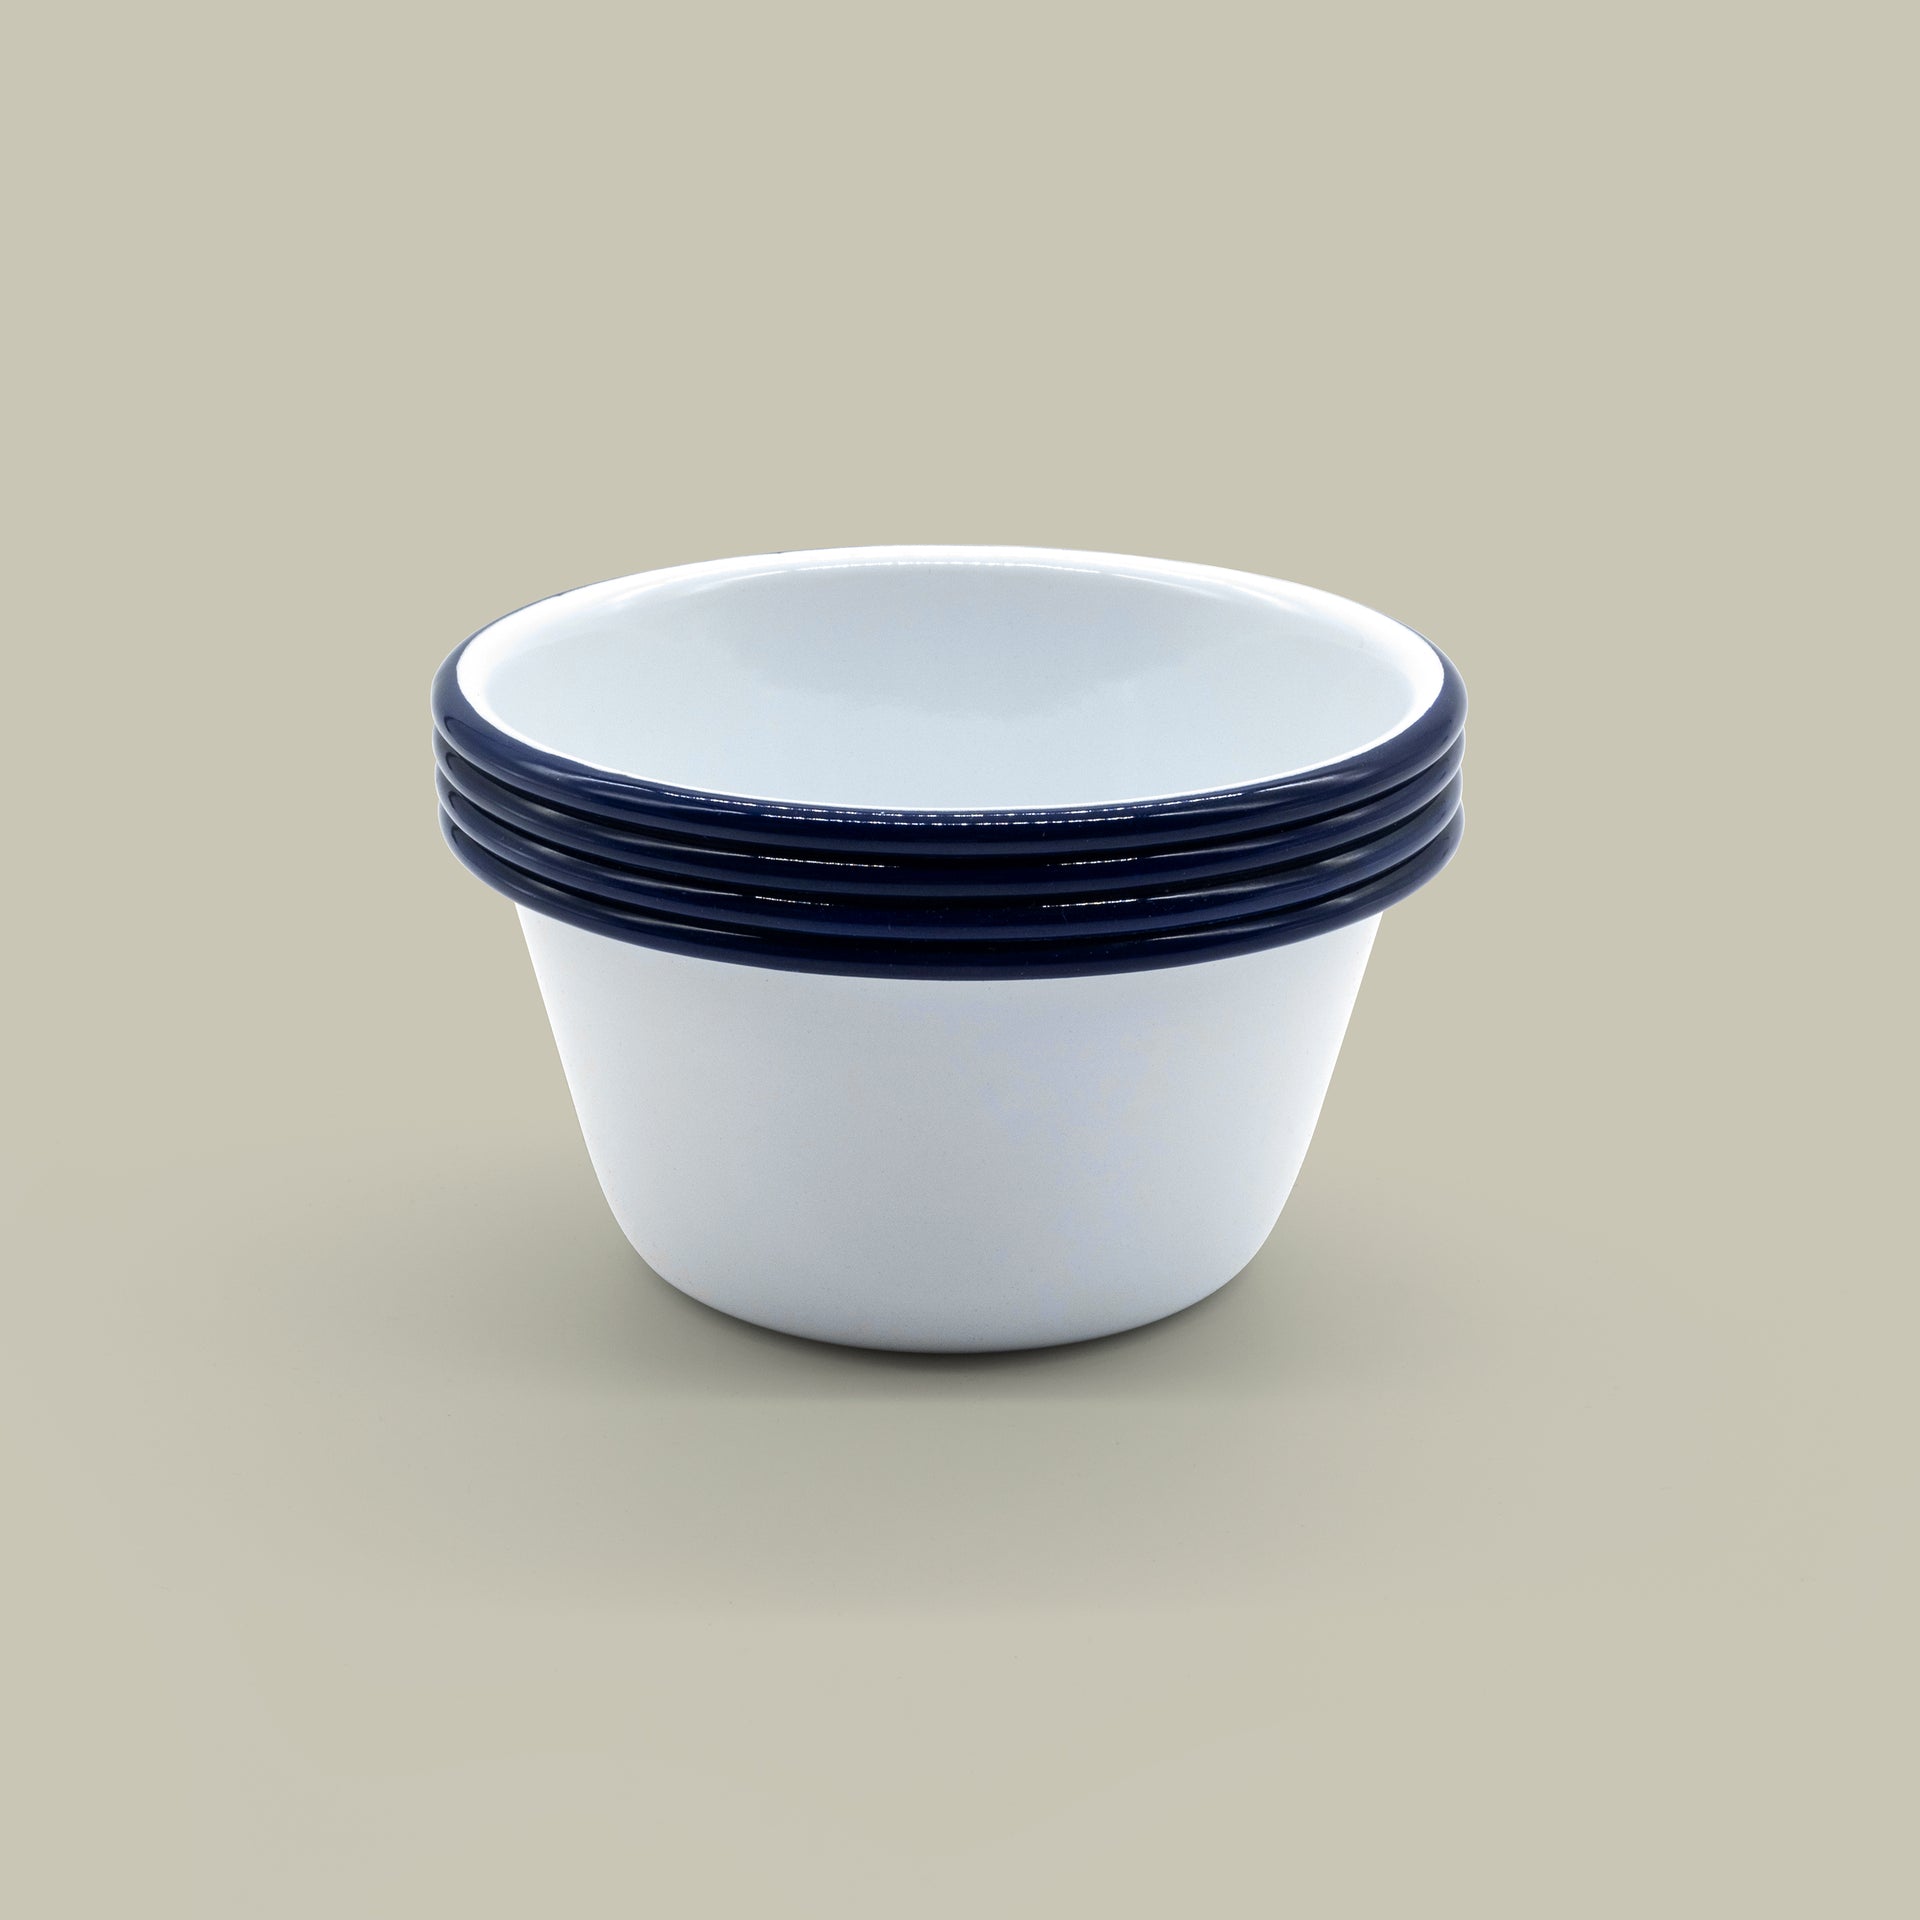 falcon 12cm Bowls - White with Blue rim